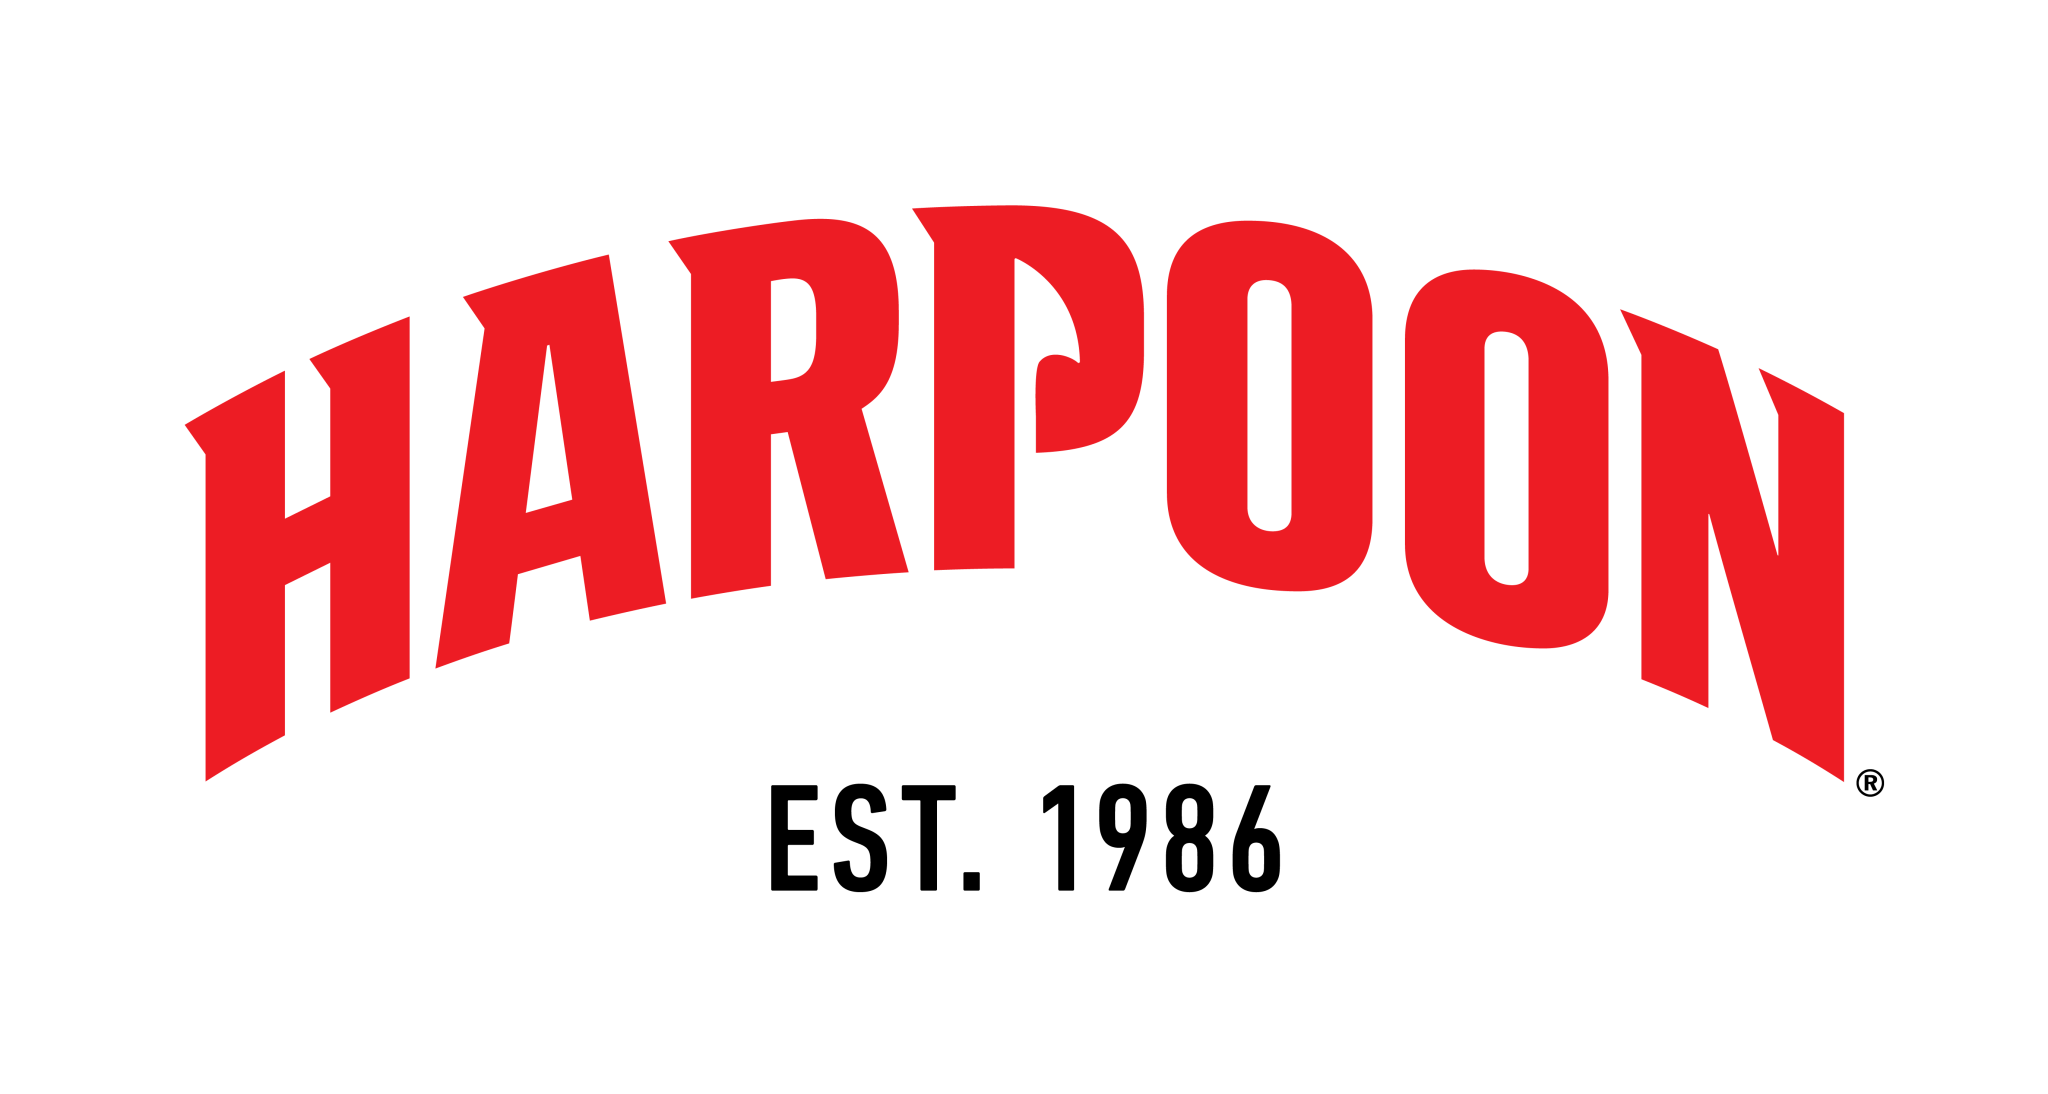 HARPOON BREWERY